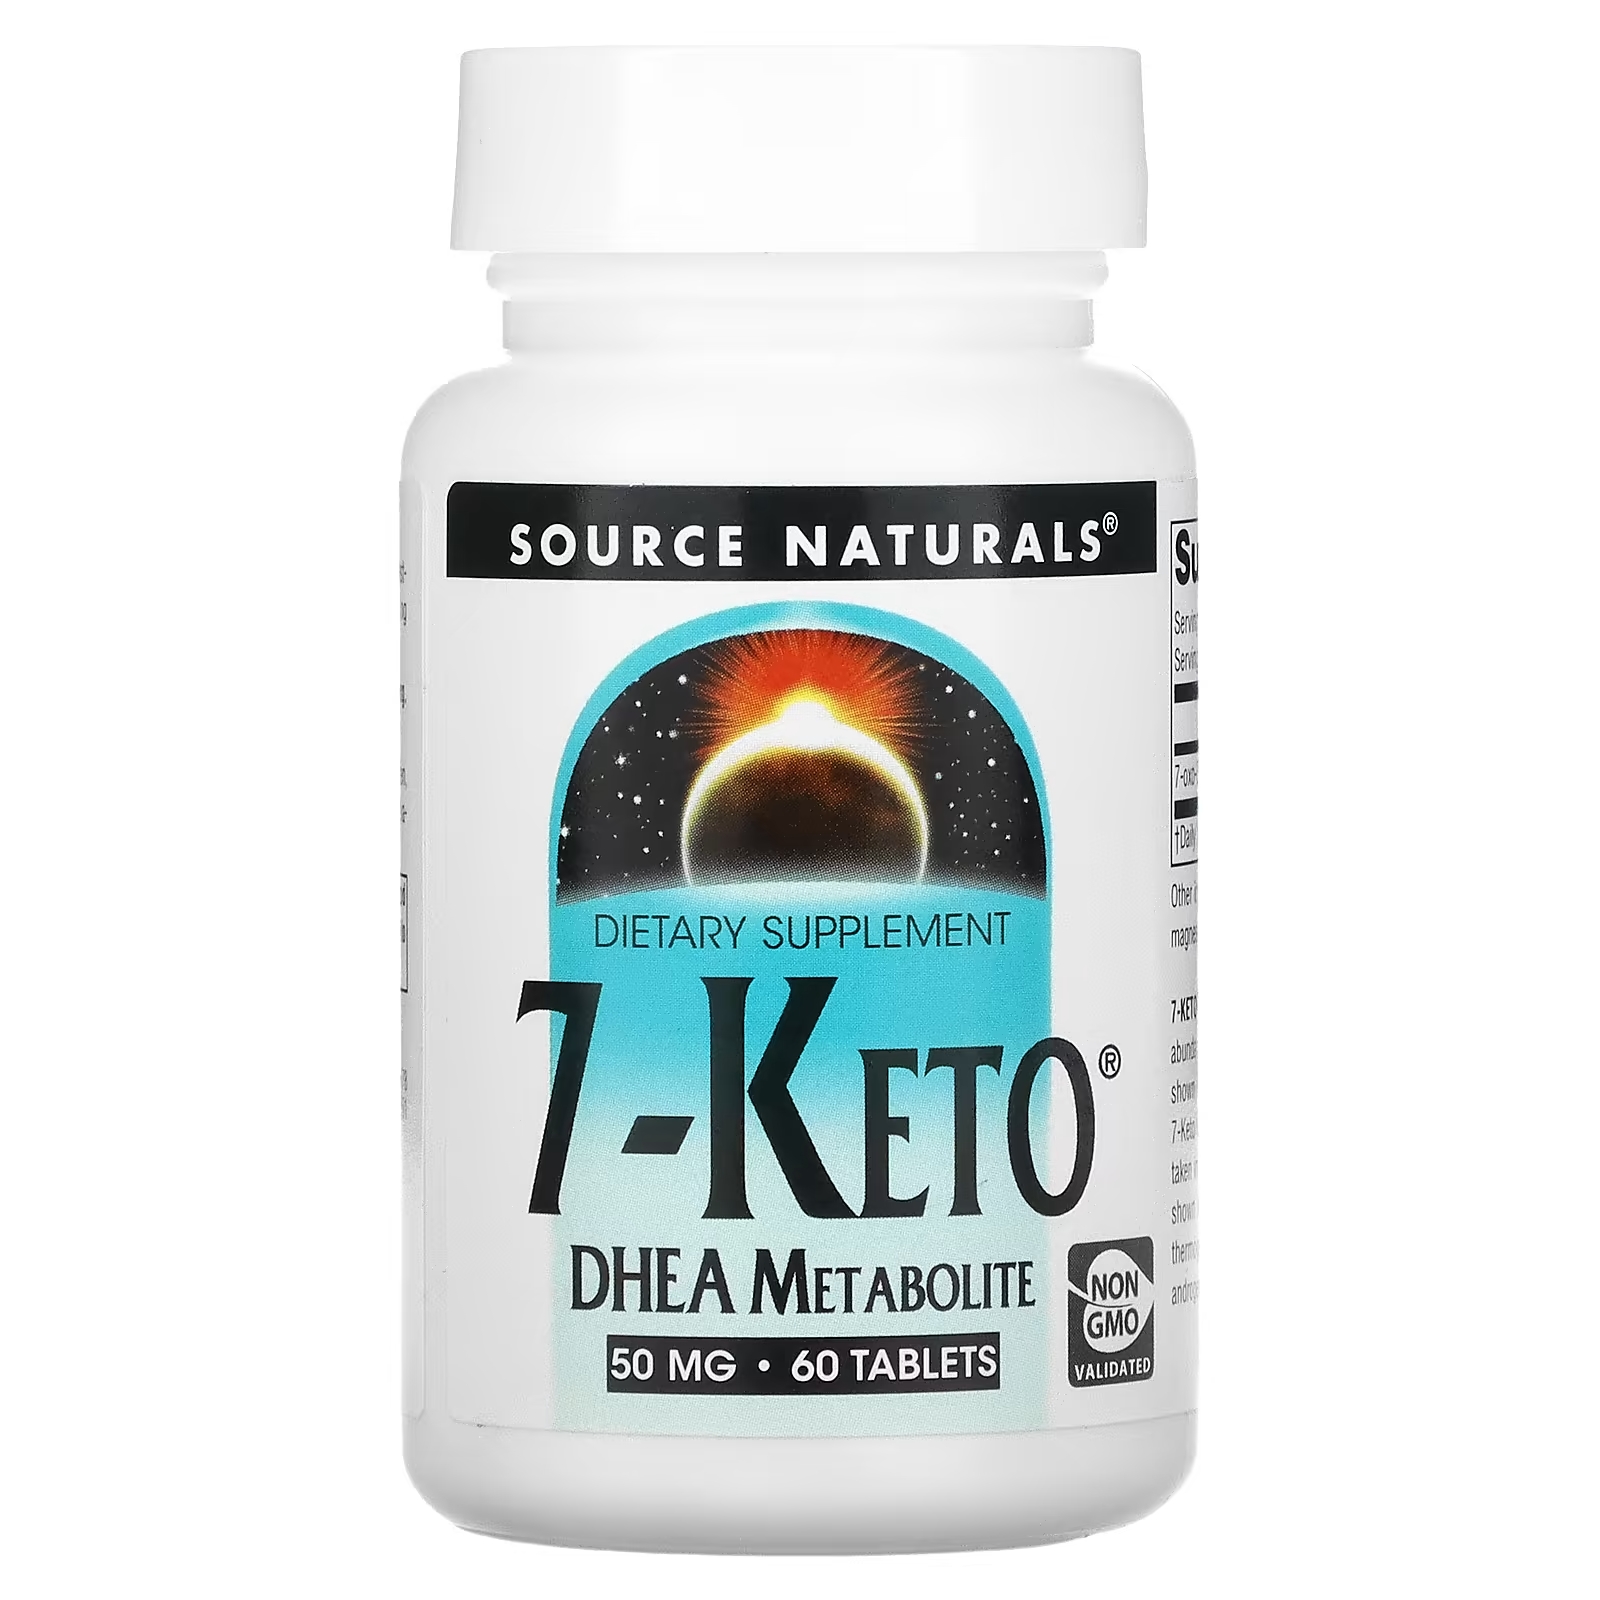 Source Naturals 7-Keto метаболит ДГЭА 50 мг, 60 таблеток sundown naturals дгэа 50 мг 60 таблеток